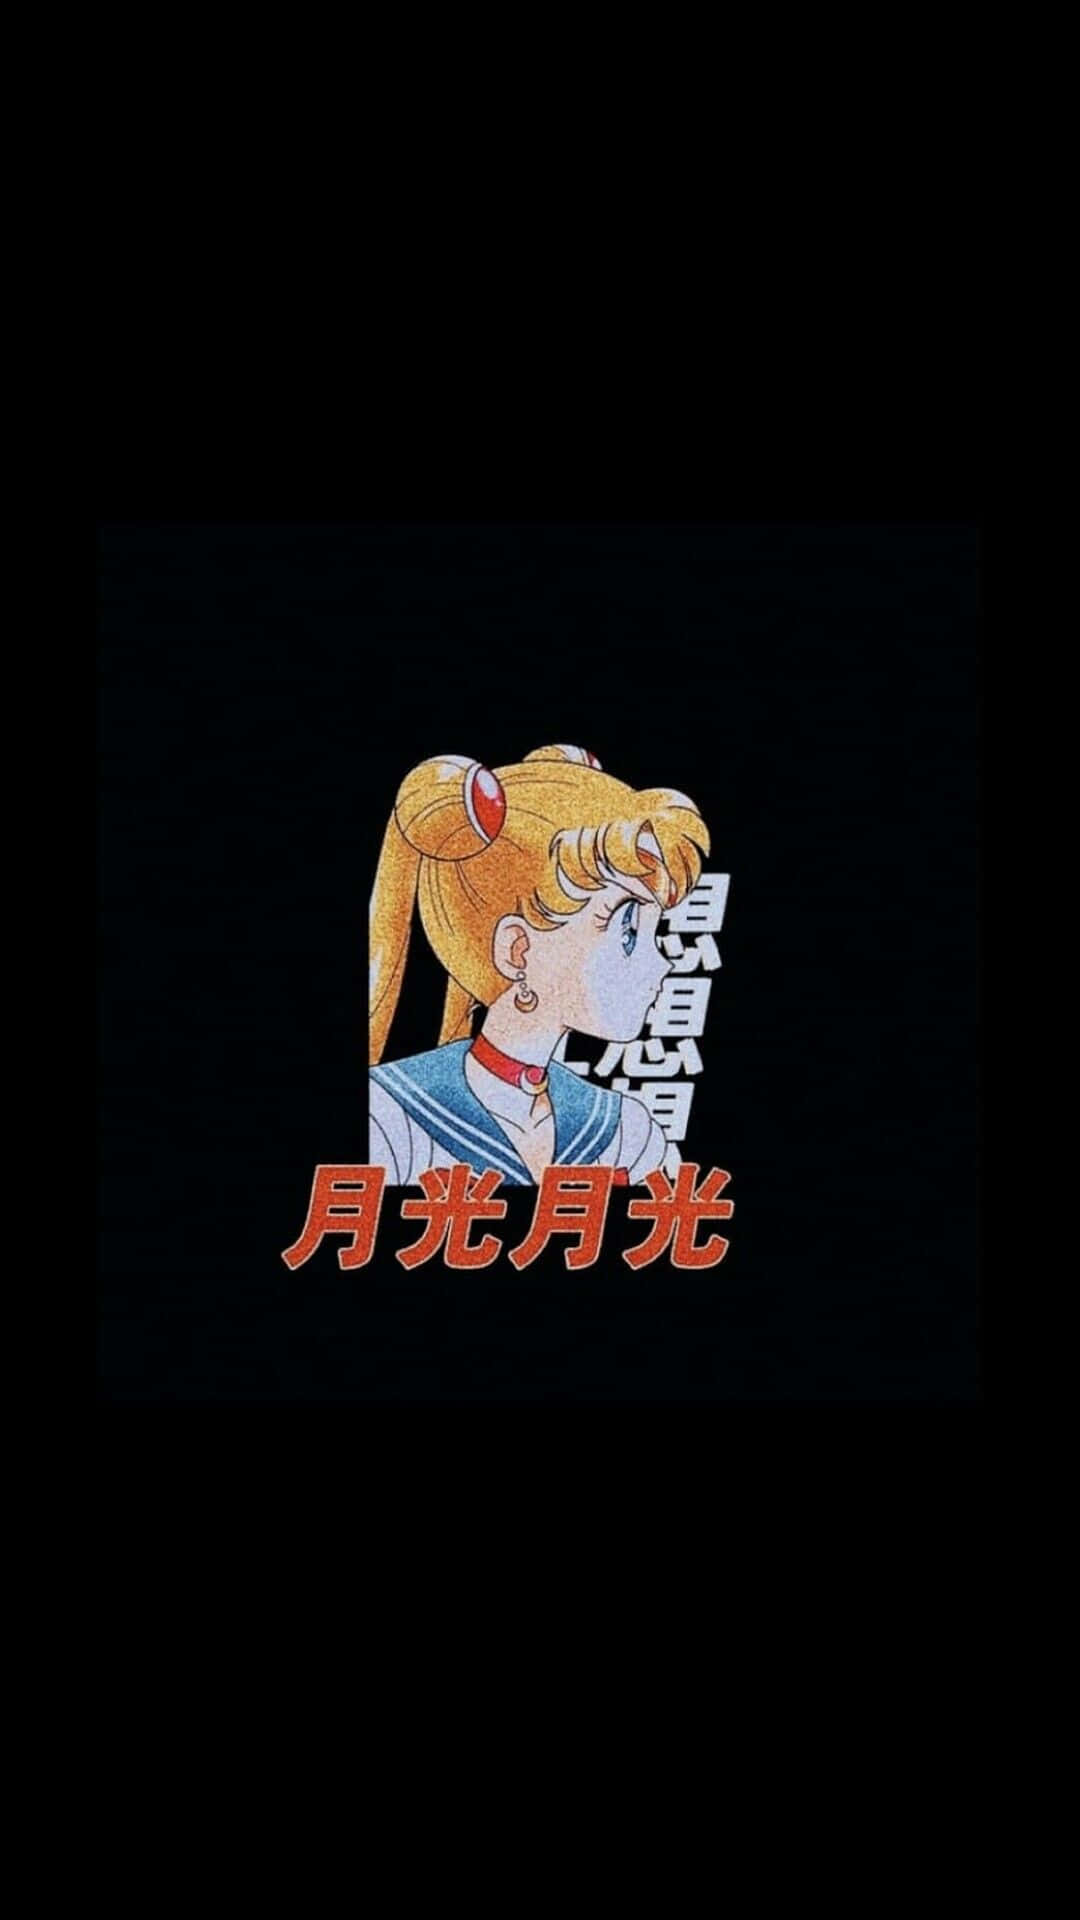 Download 90s Anime Aesthetic Wallpaper 